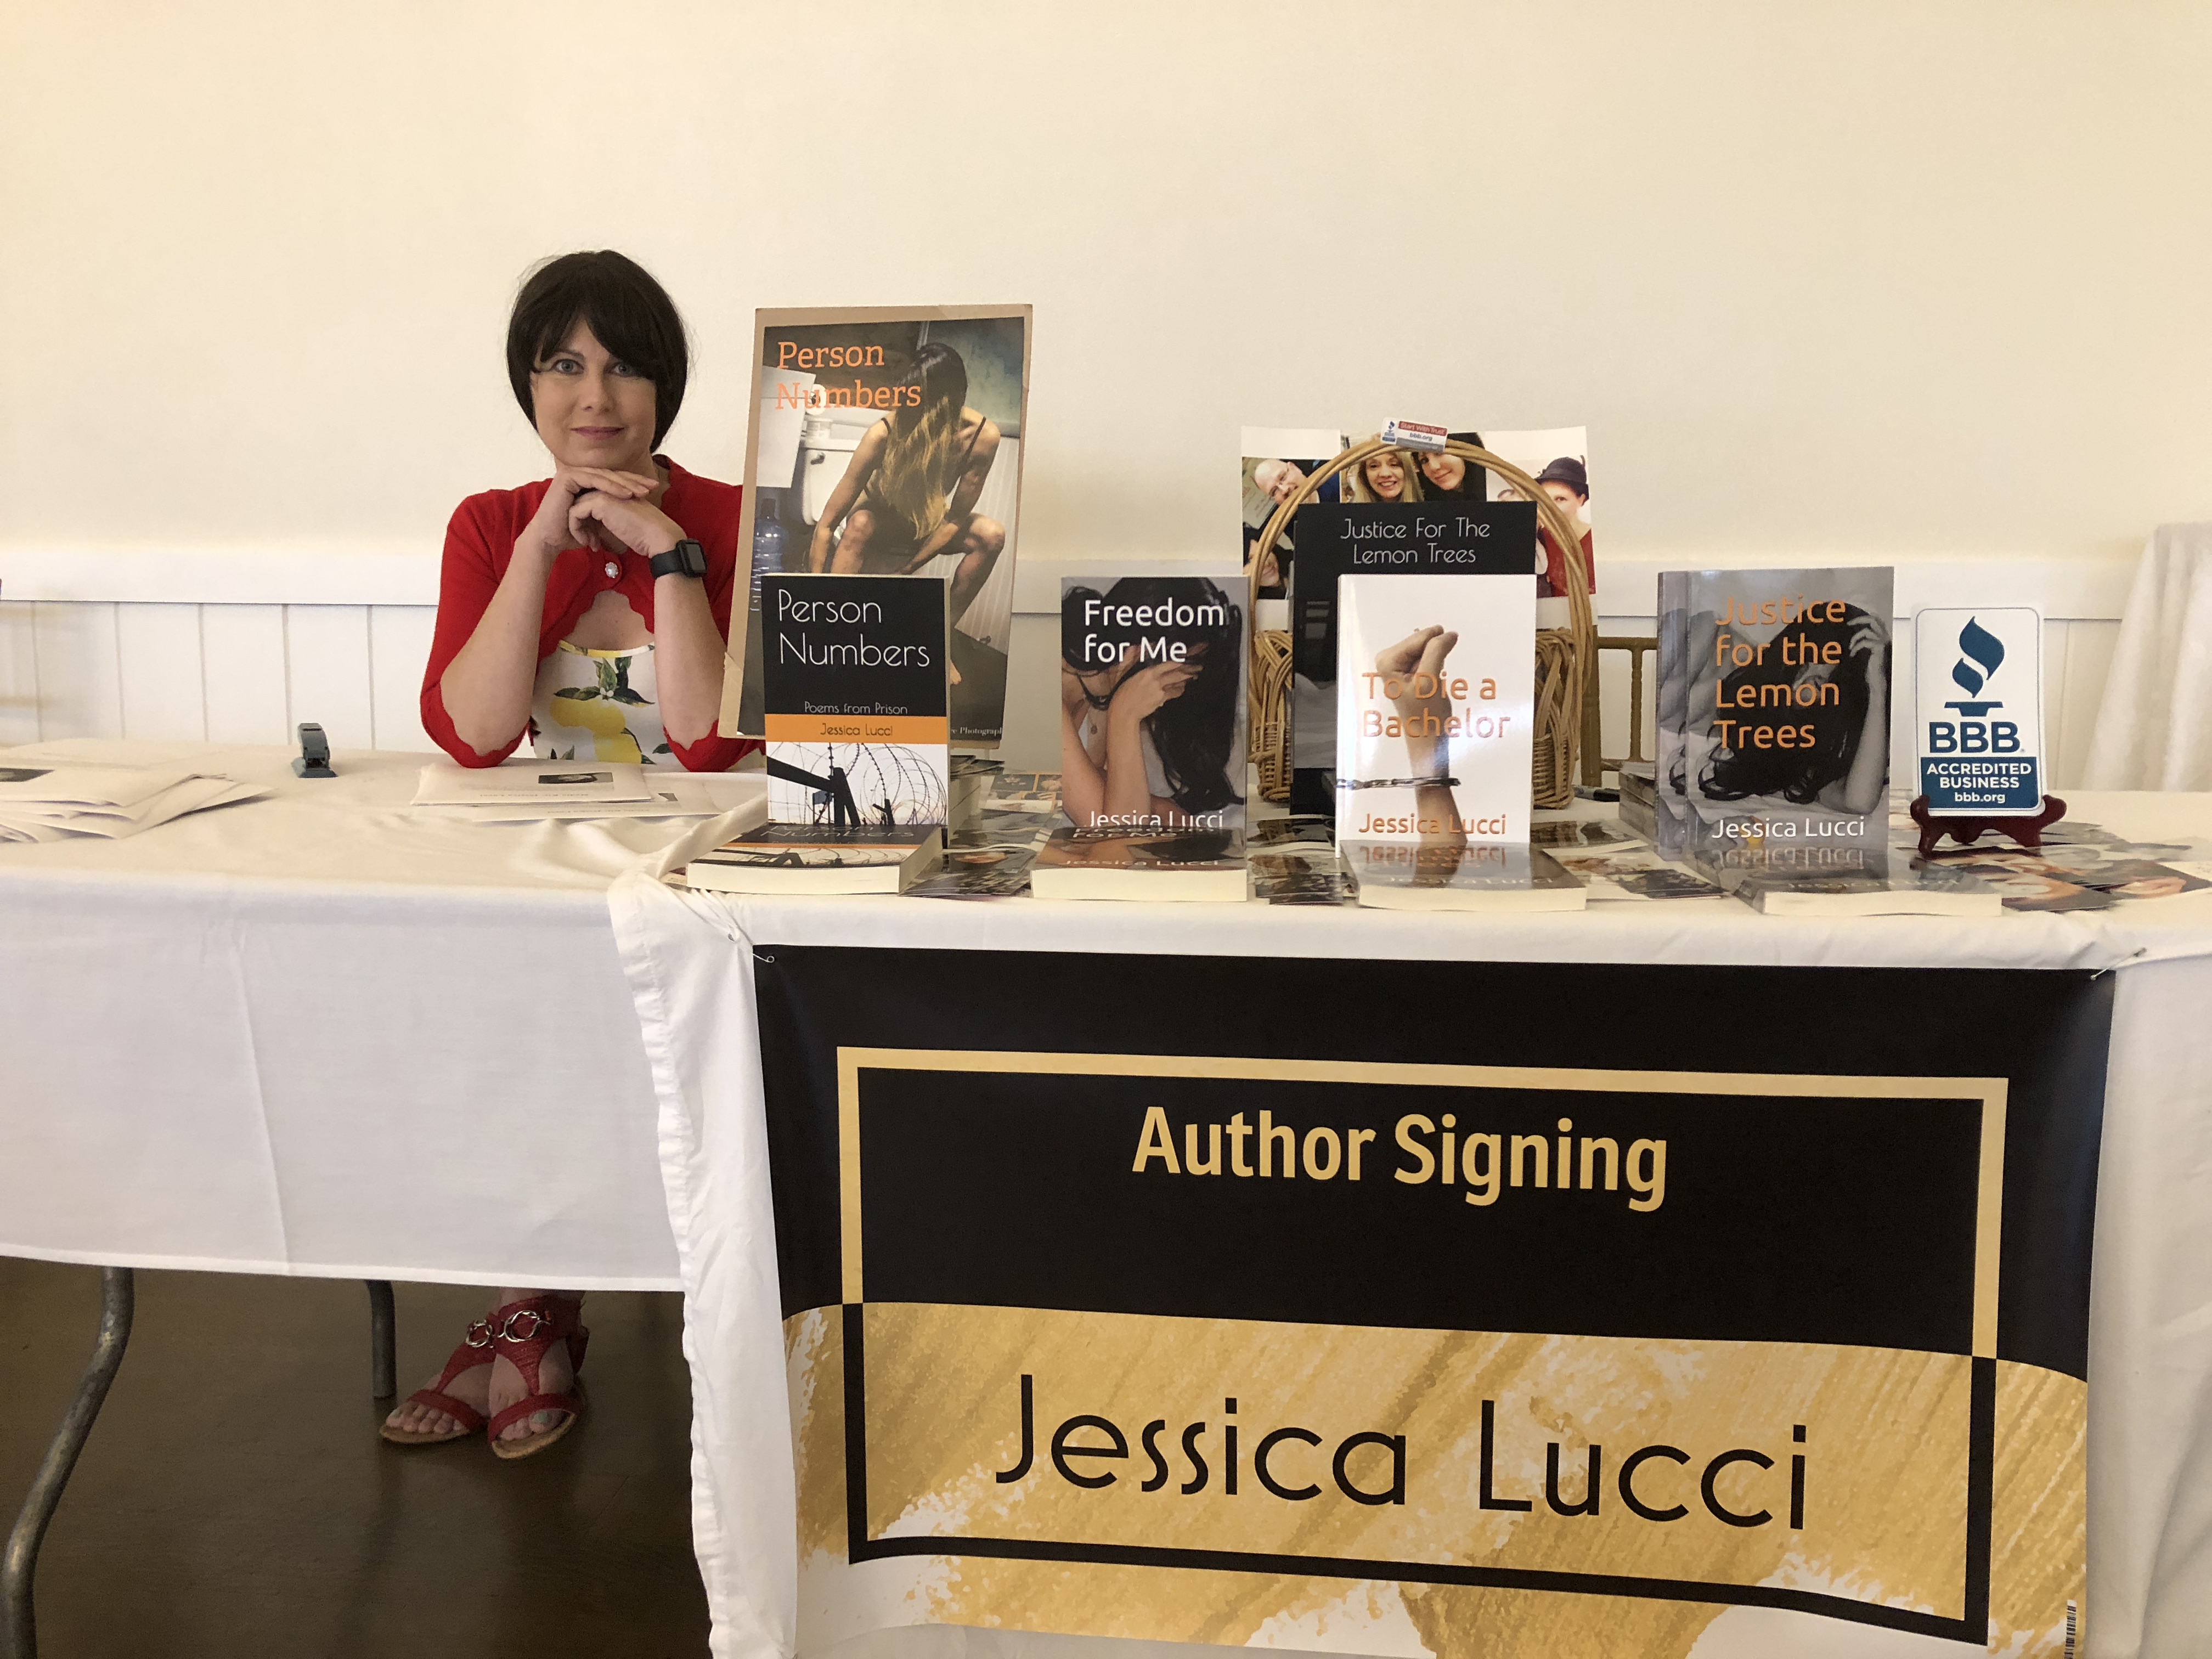 Author Jessica Lucci (https://www.jessicalucci.org).